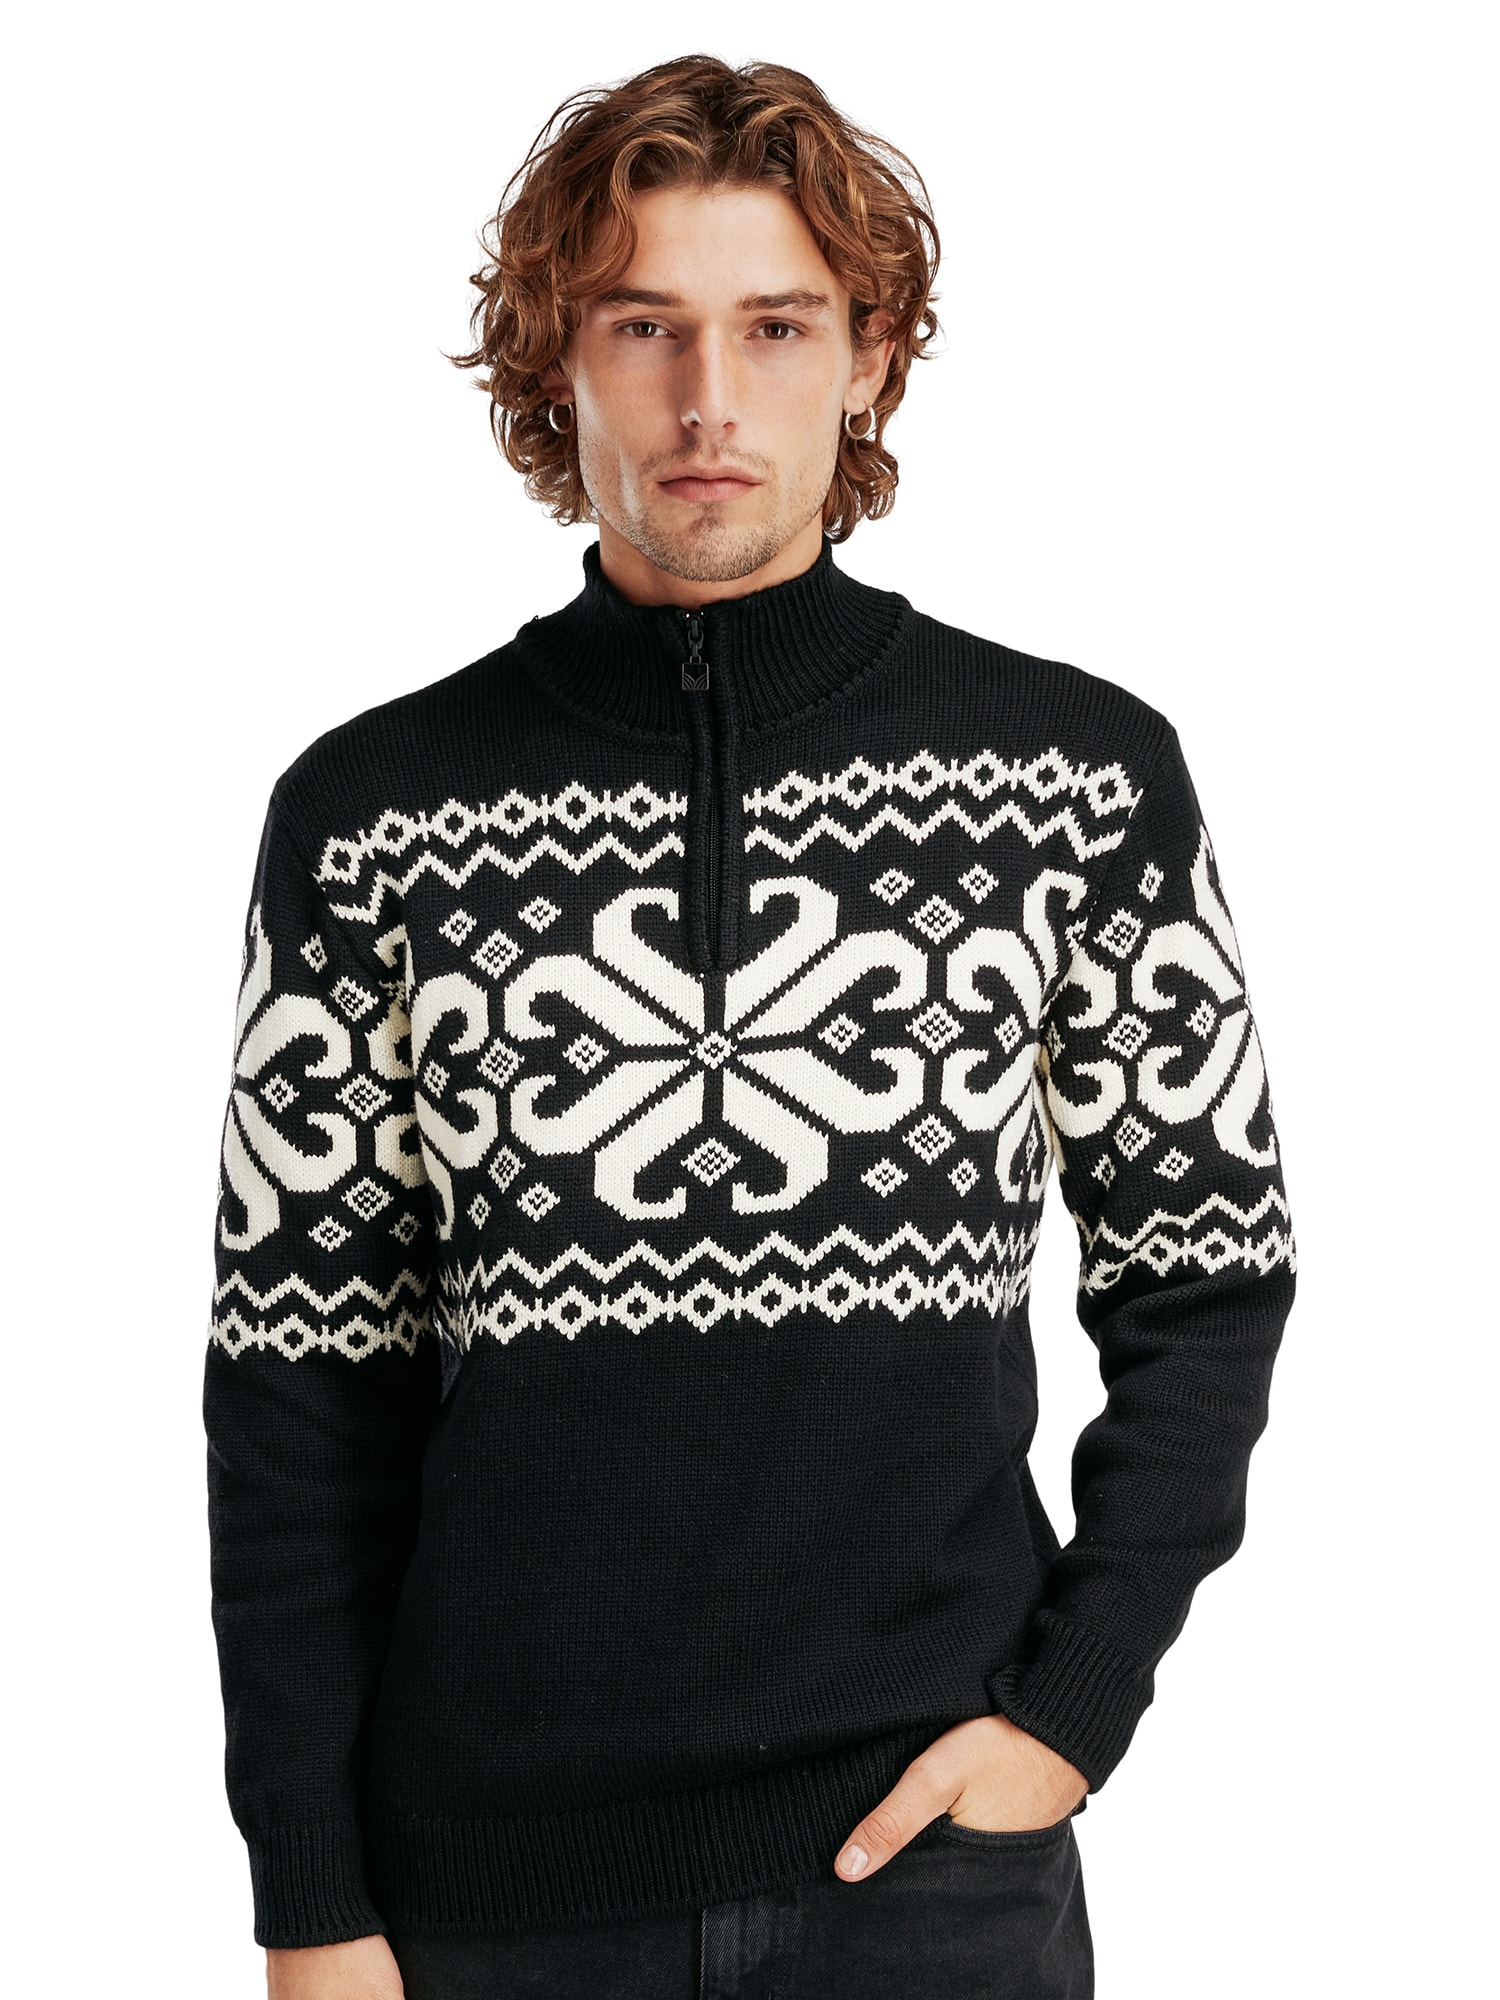 Falkeberg Masculine Sweater Black Offwhite - Dale of Norway